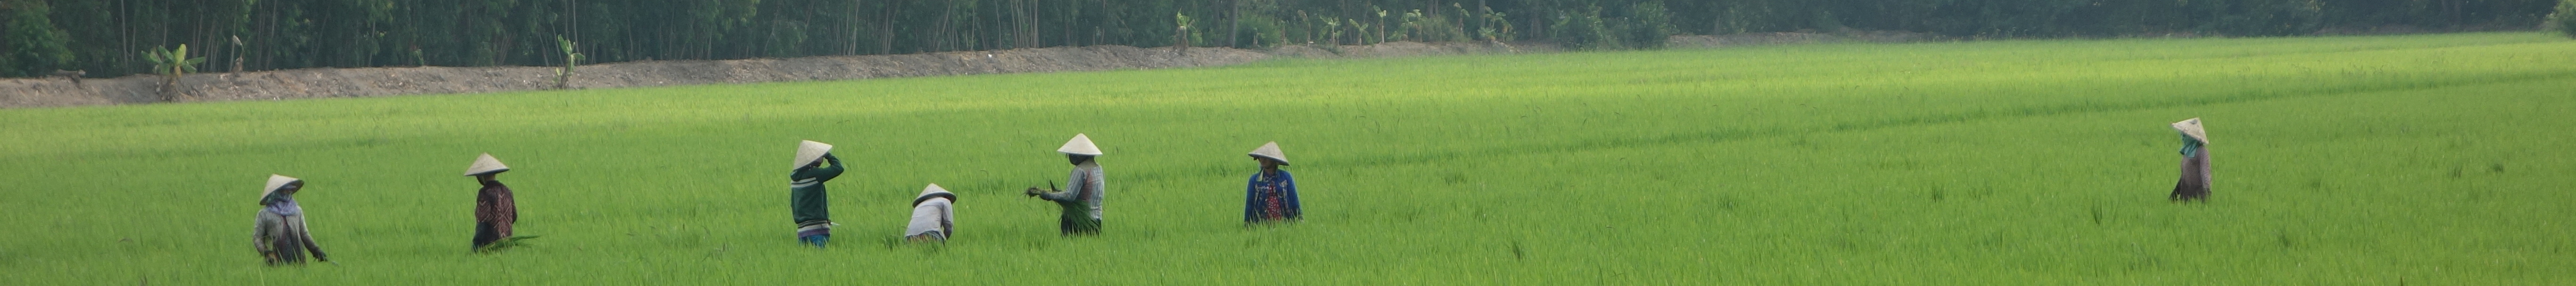 Biorist Biogas Rice Straw Reisstroh Mekong Delta Rural